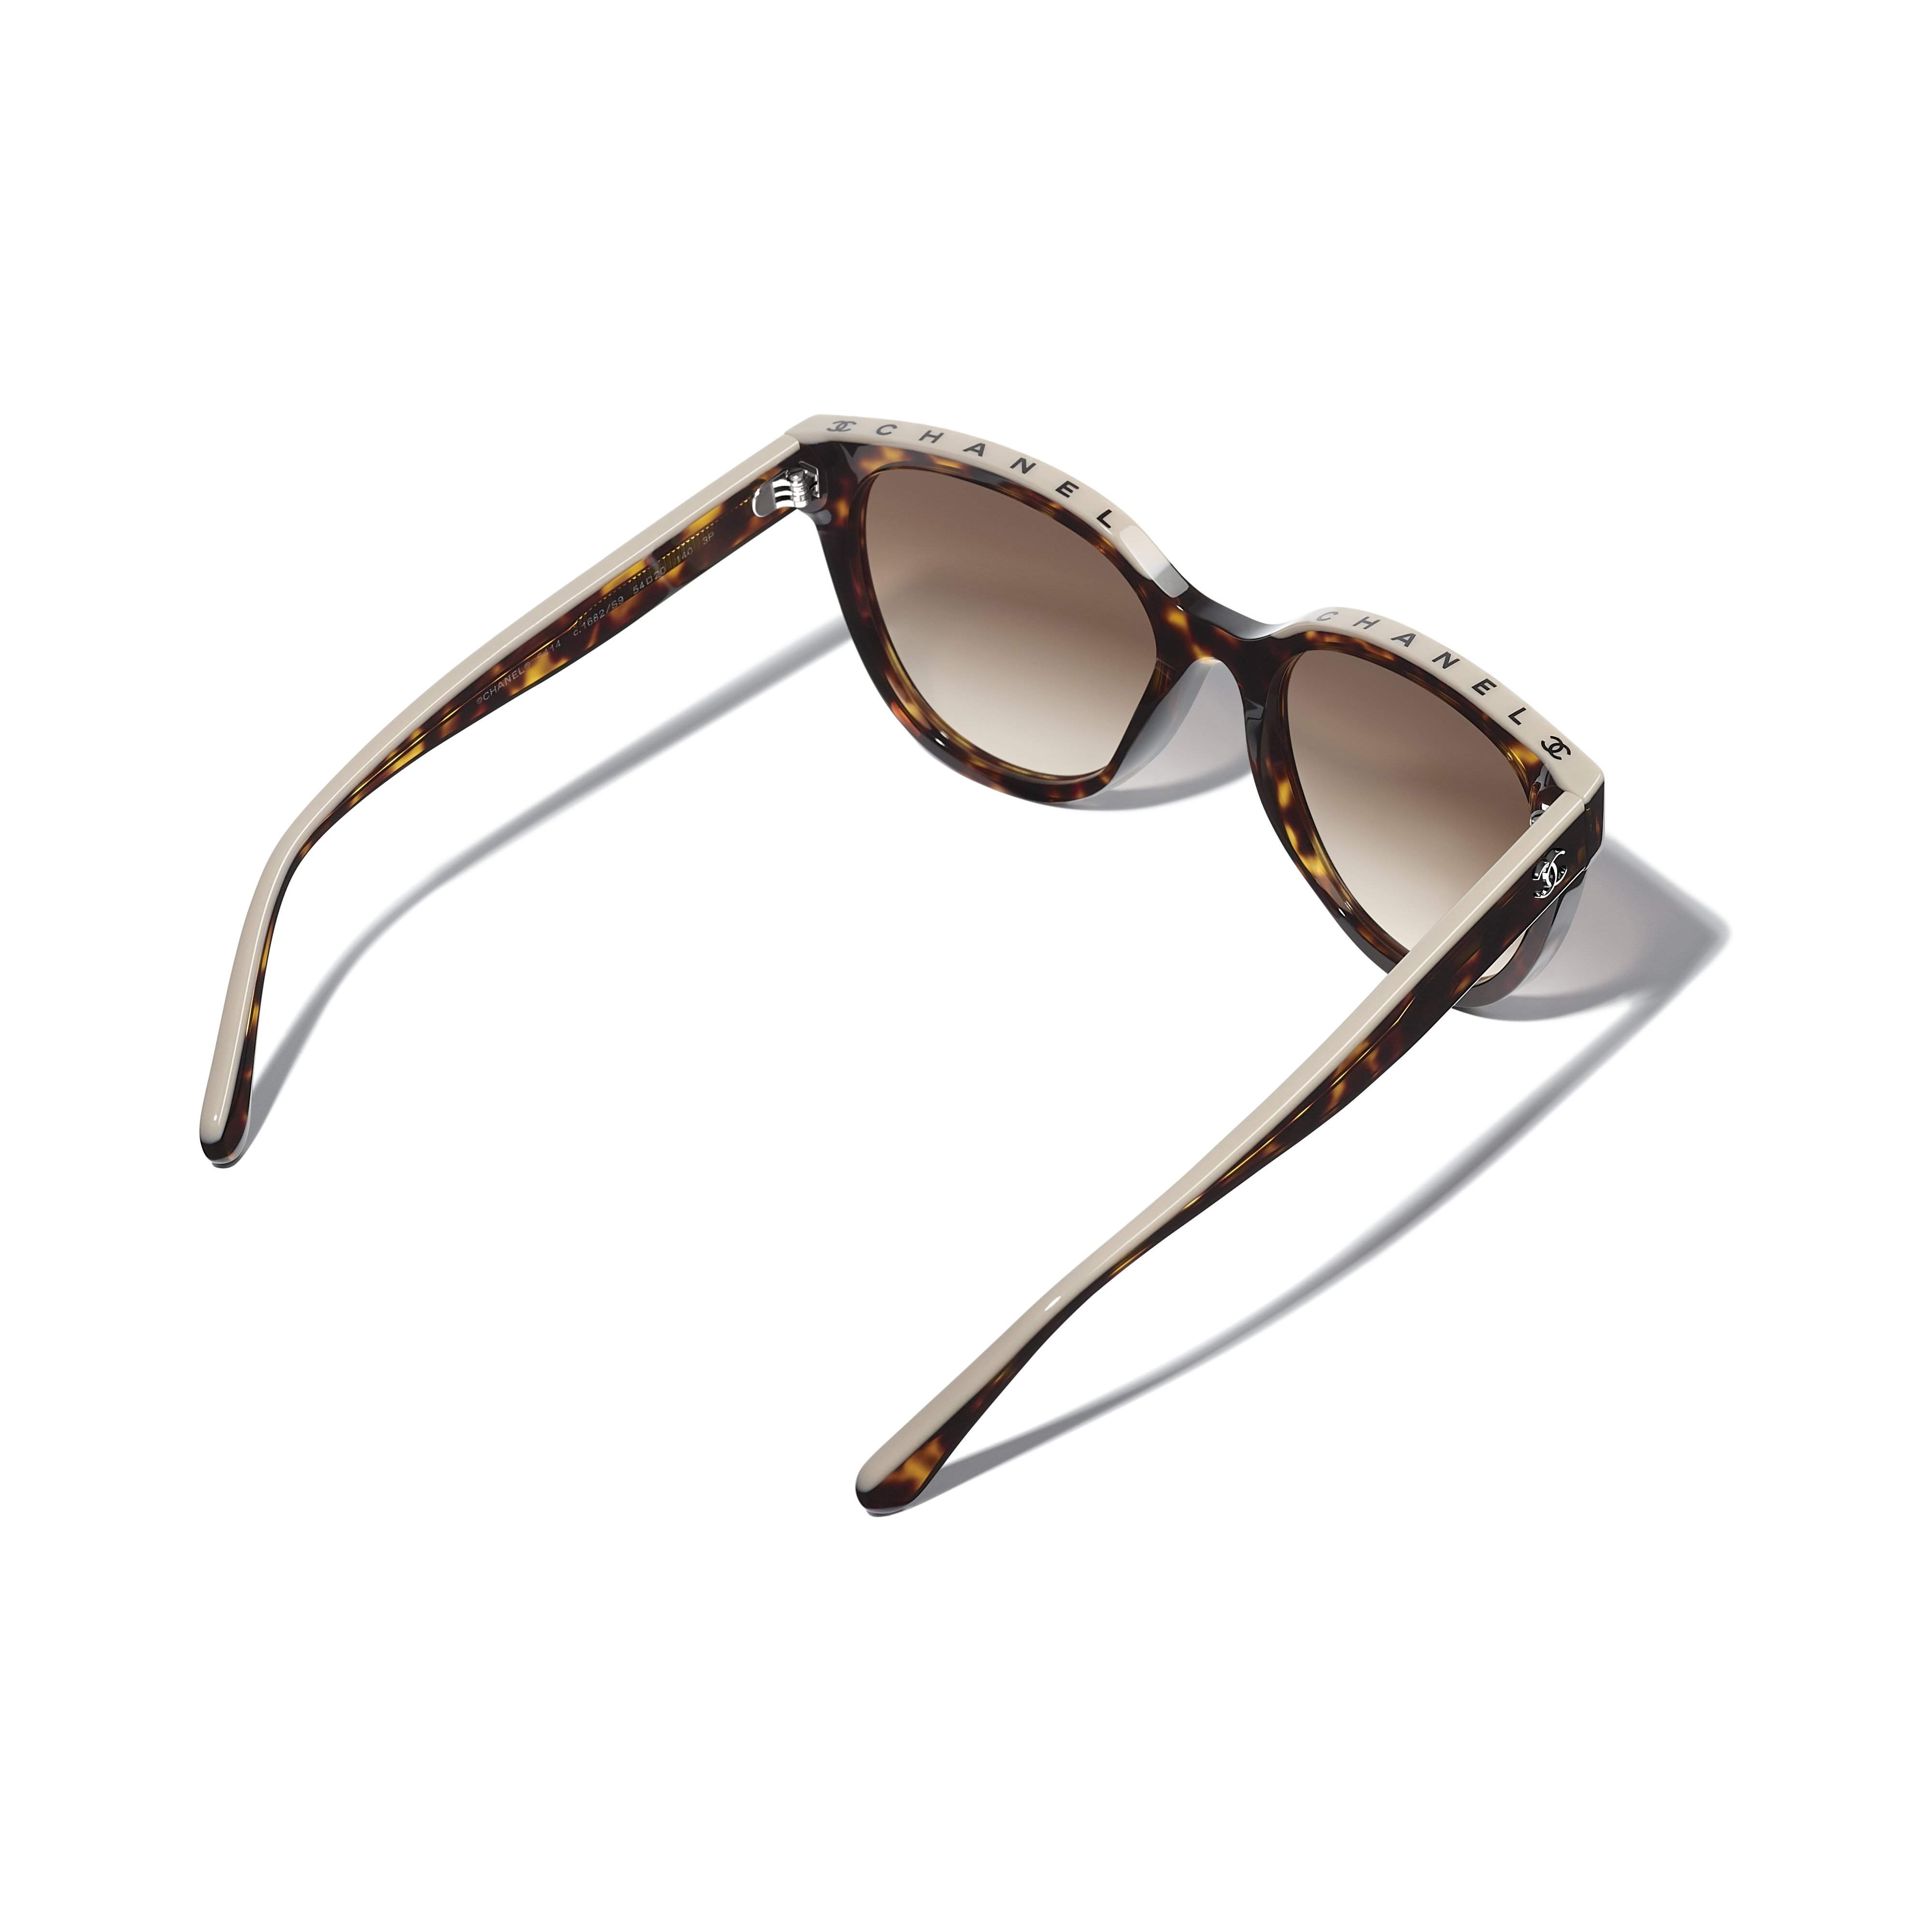 Sunglasses Chanel CH5414 1682/S9 54-20 Ecaille Polarized Gradient